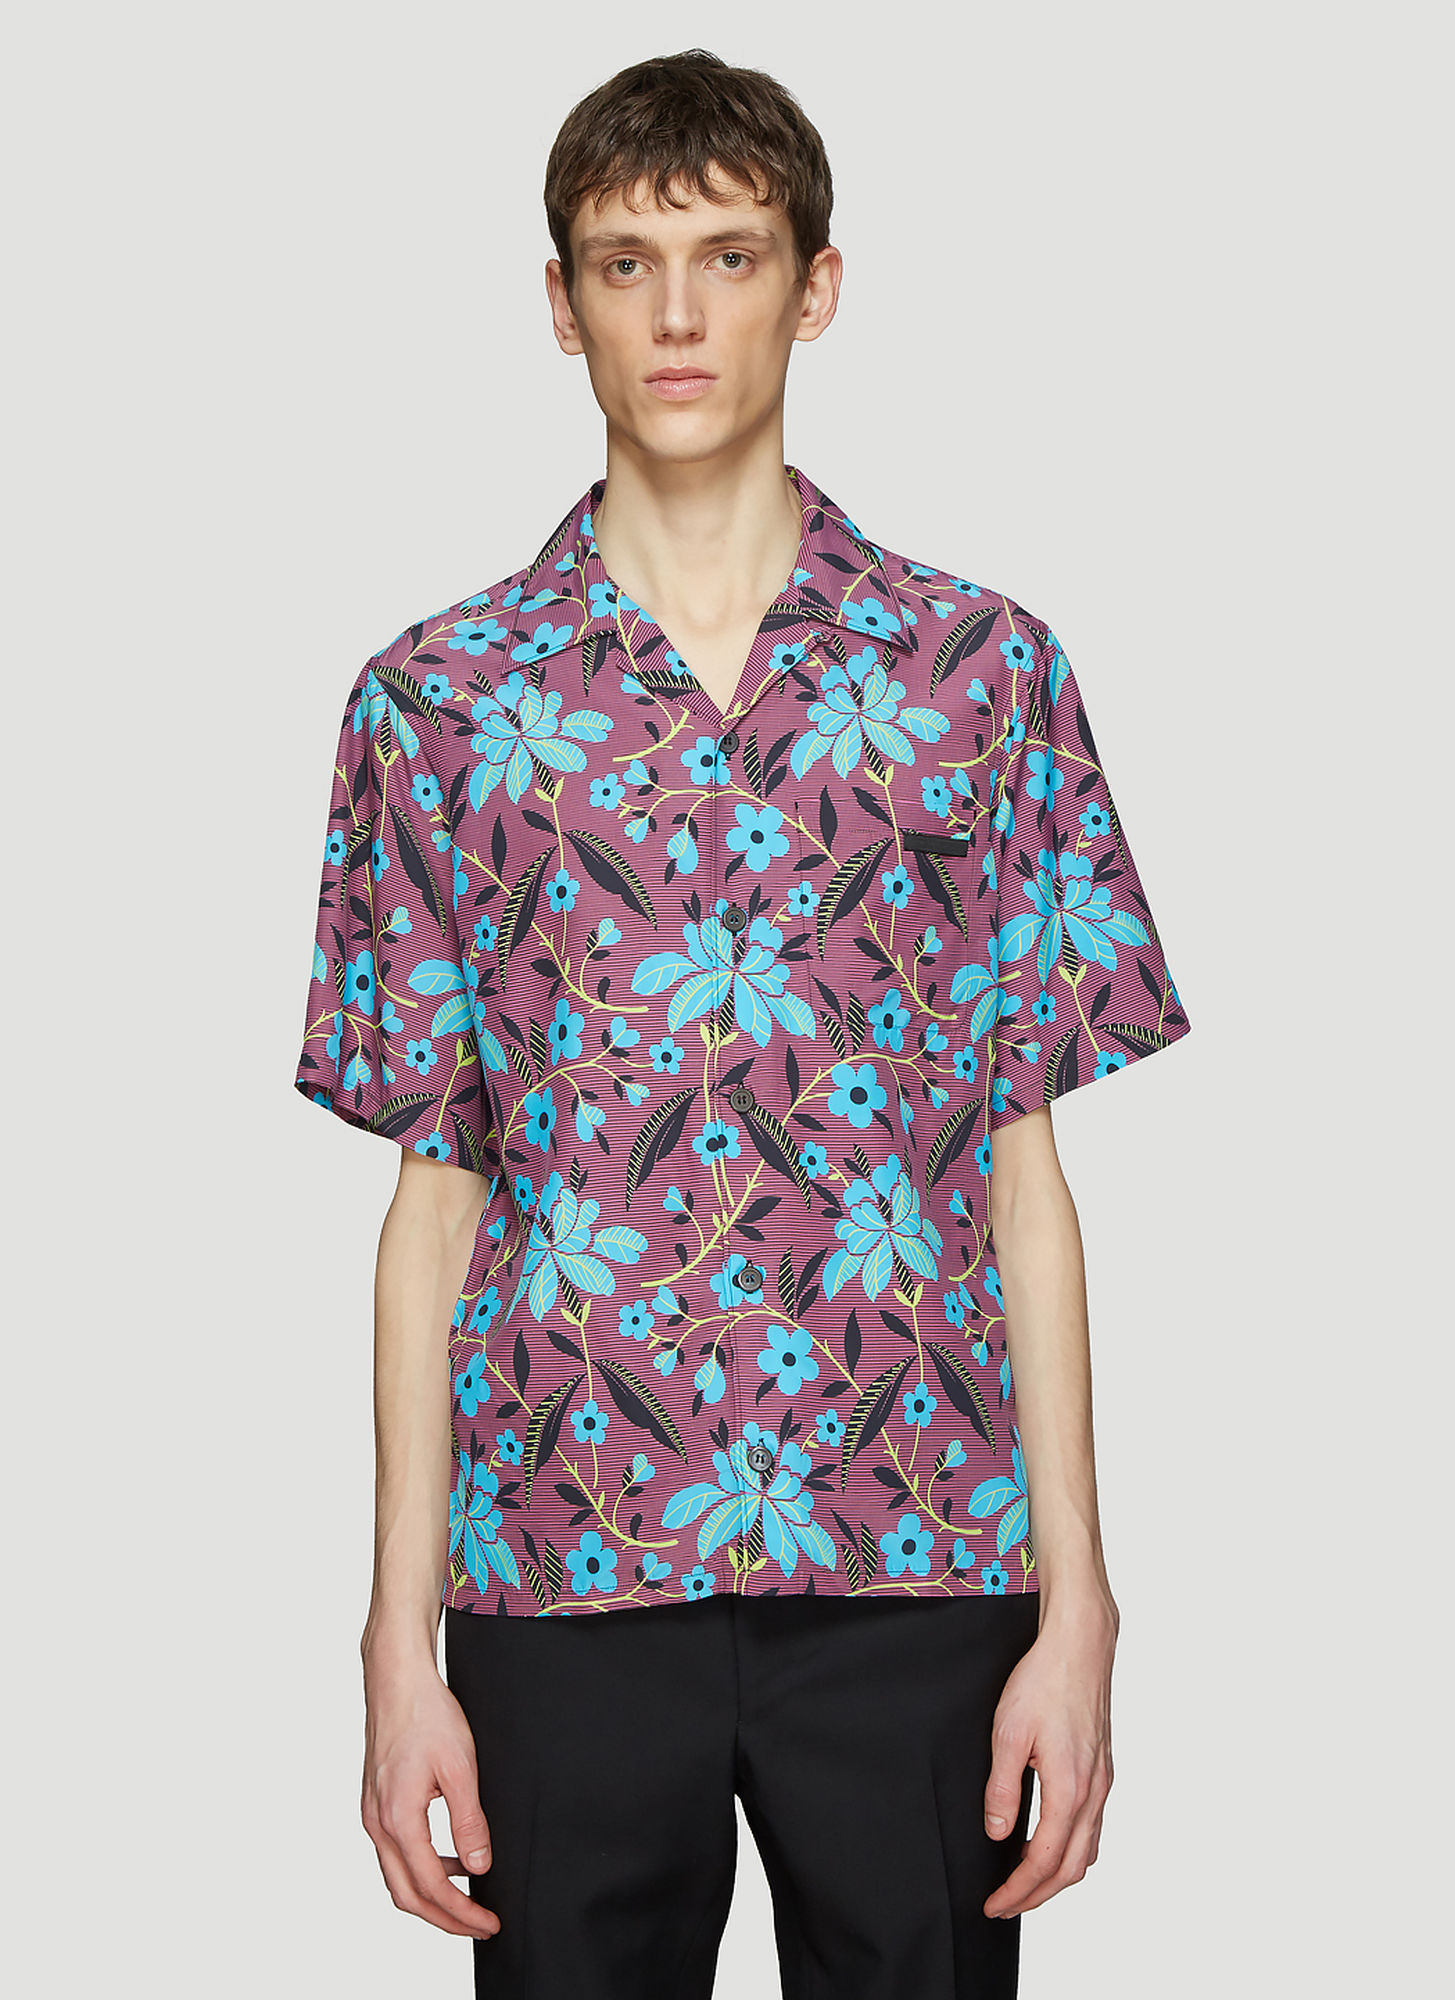 Prada Floral Print Shirt in Purple size M | The Fashionisto